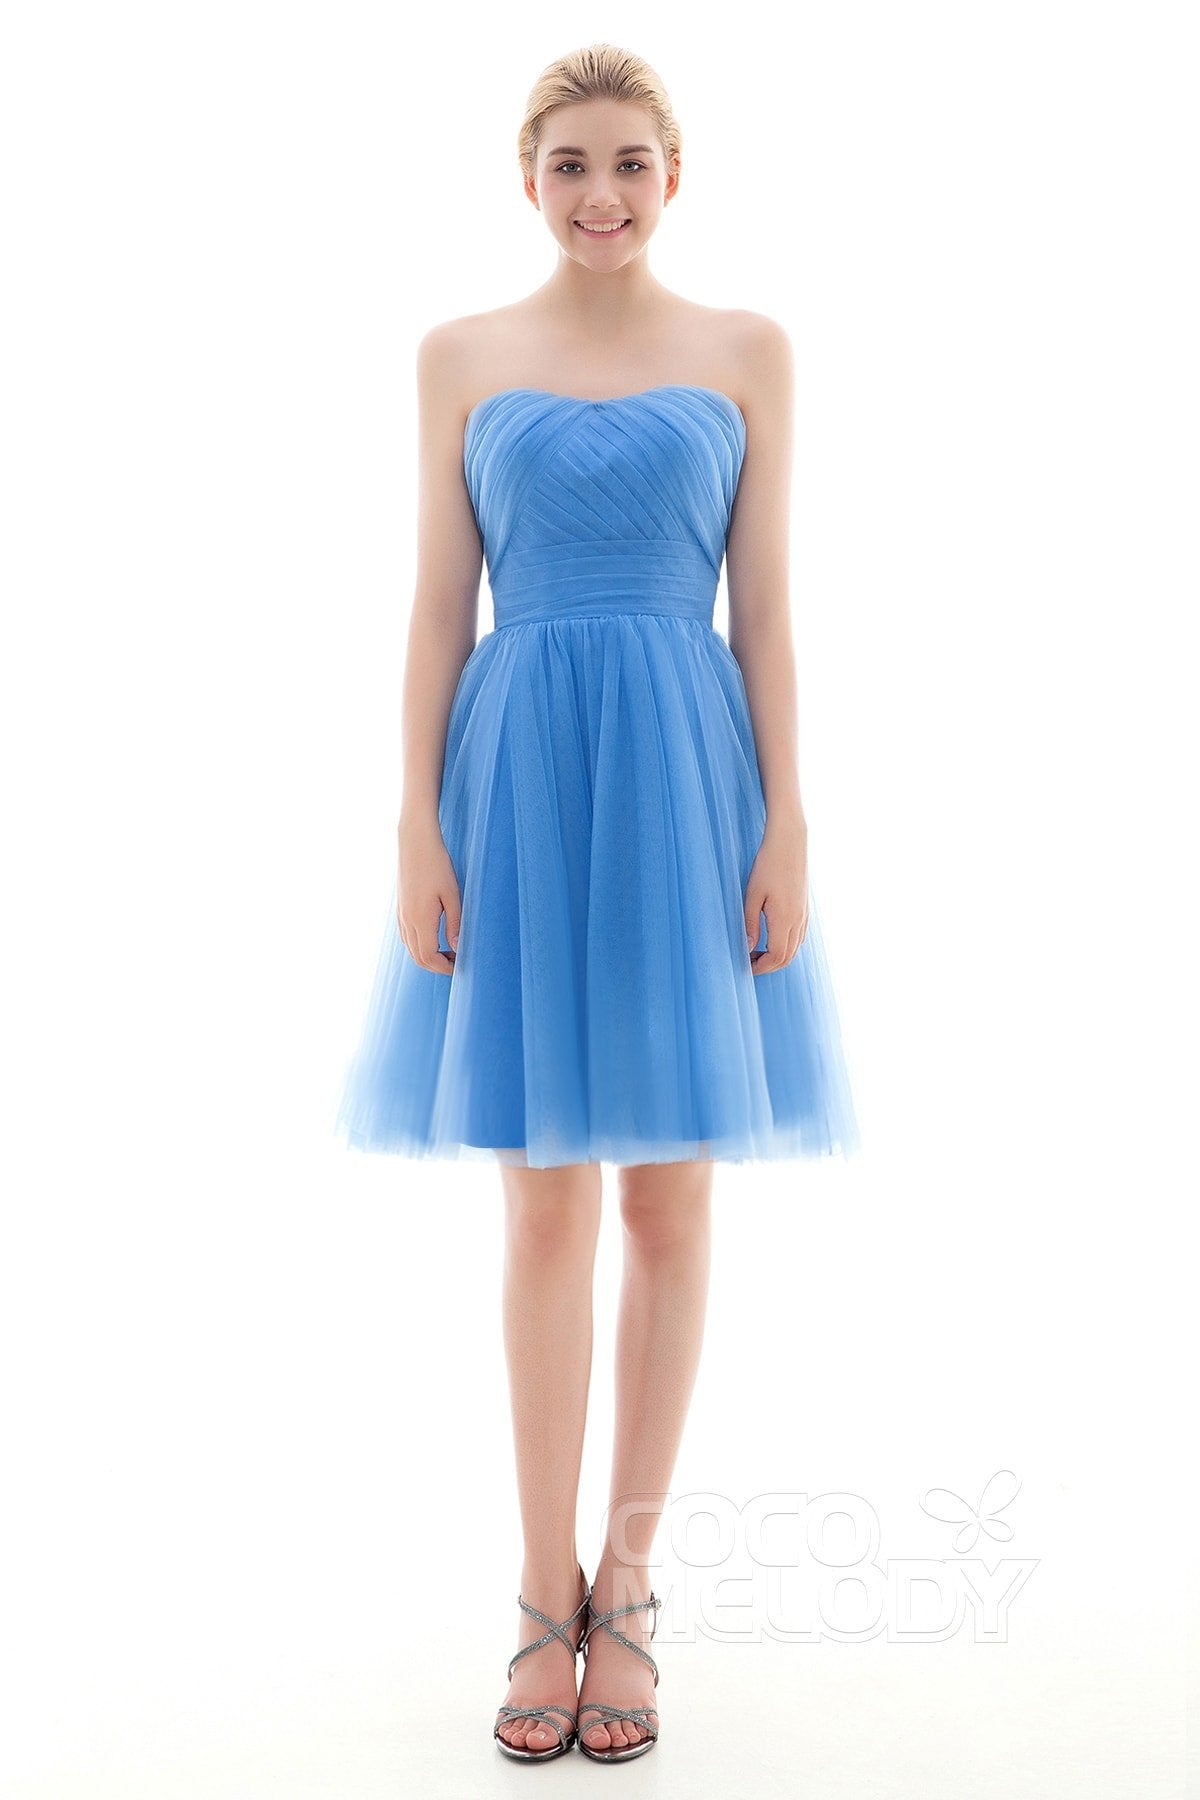 A-Line Short-Mini Tulle Bridesmaid Dress COLM16001